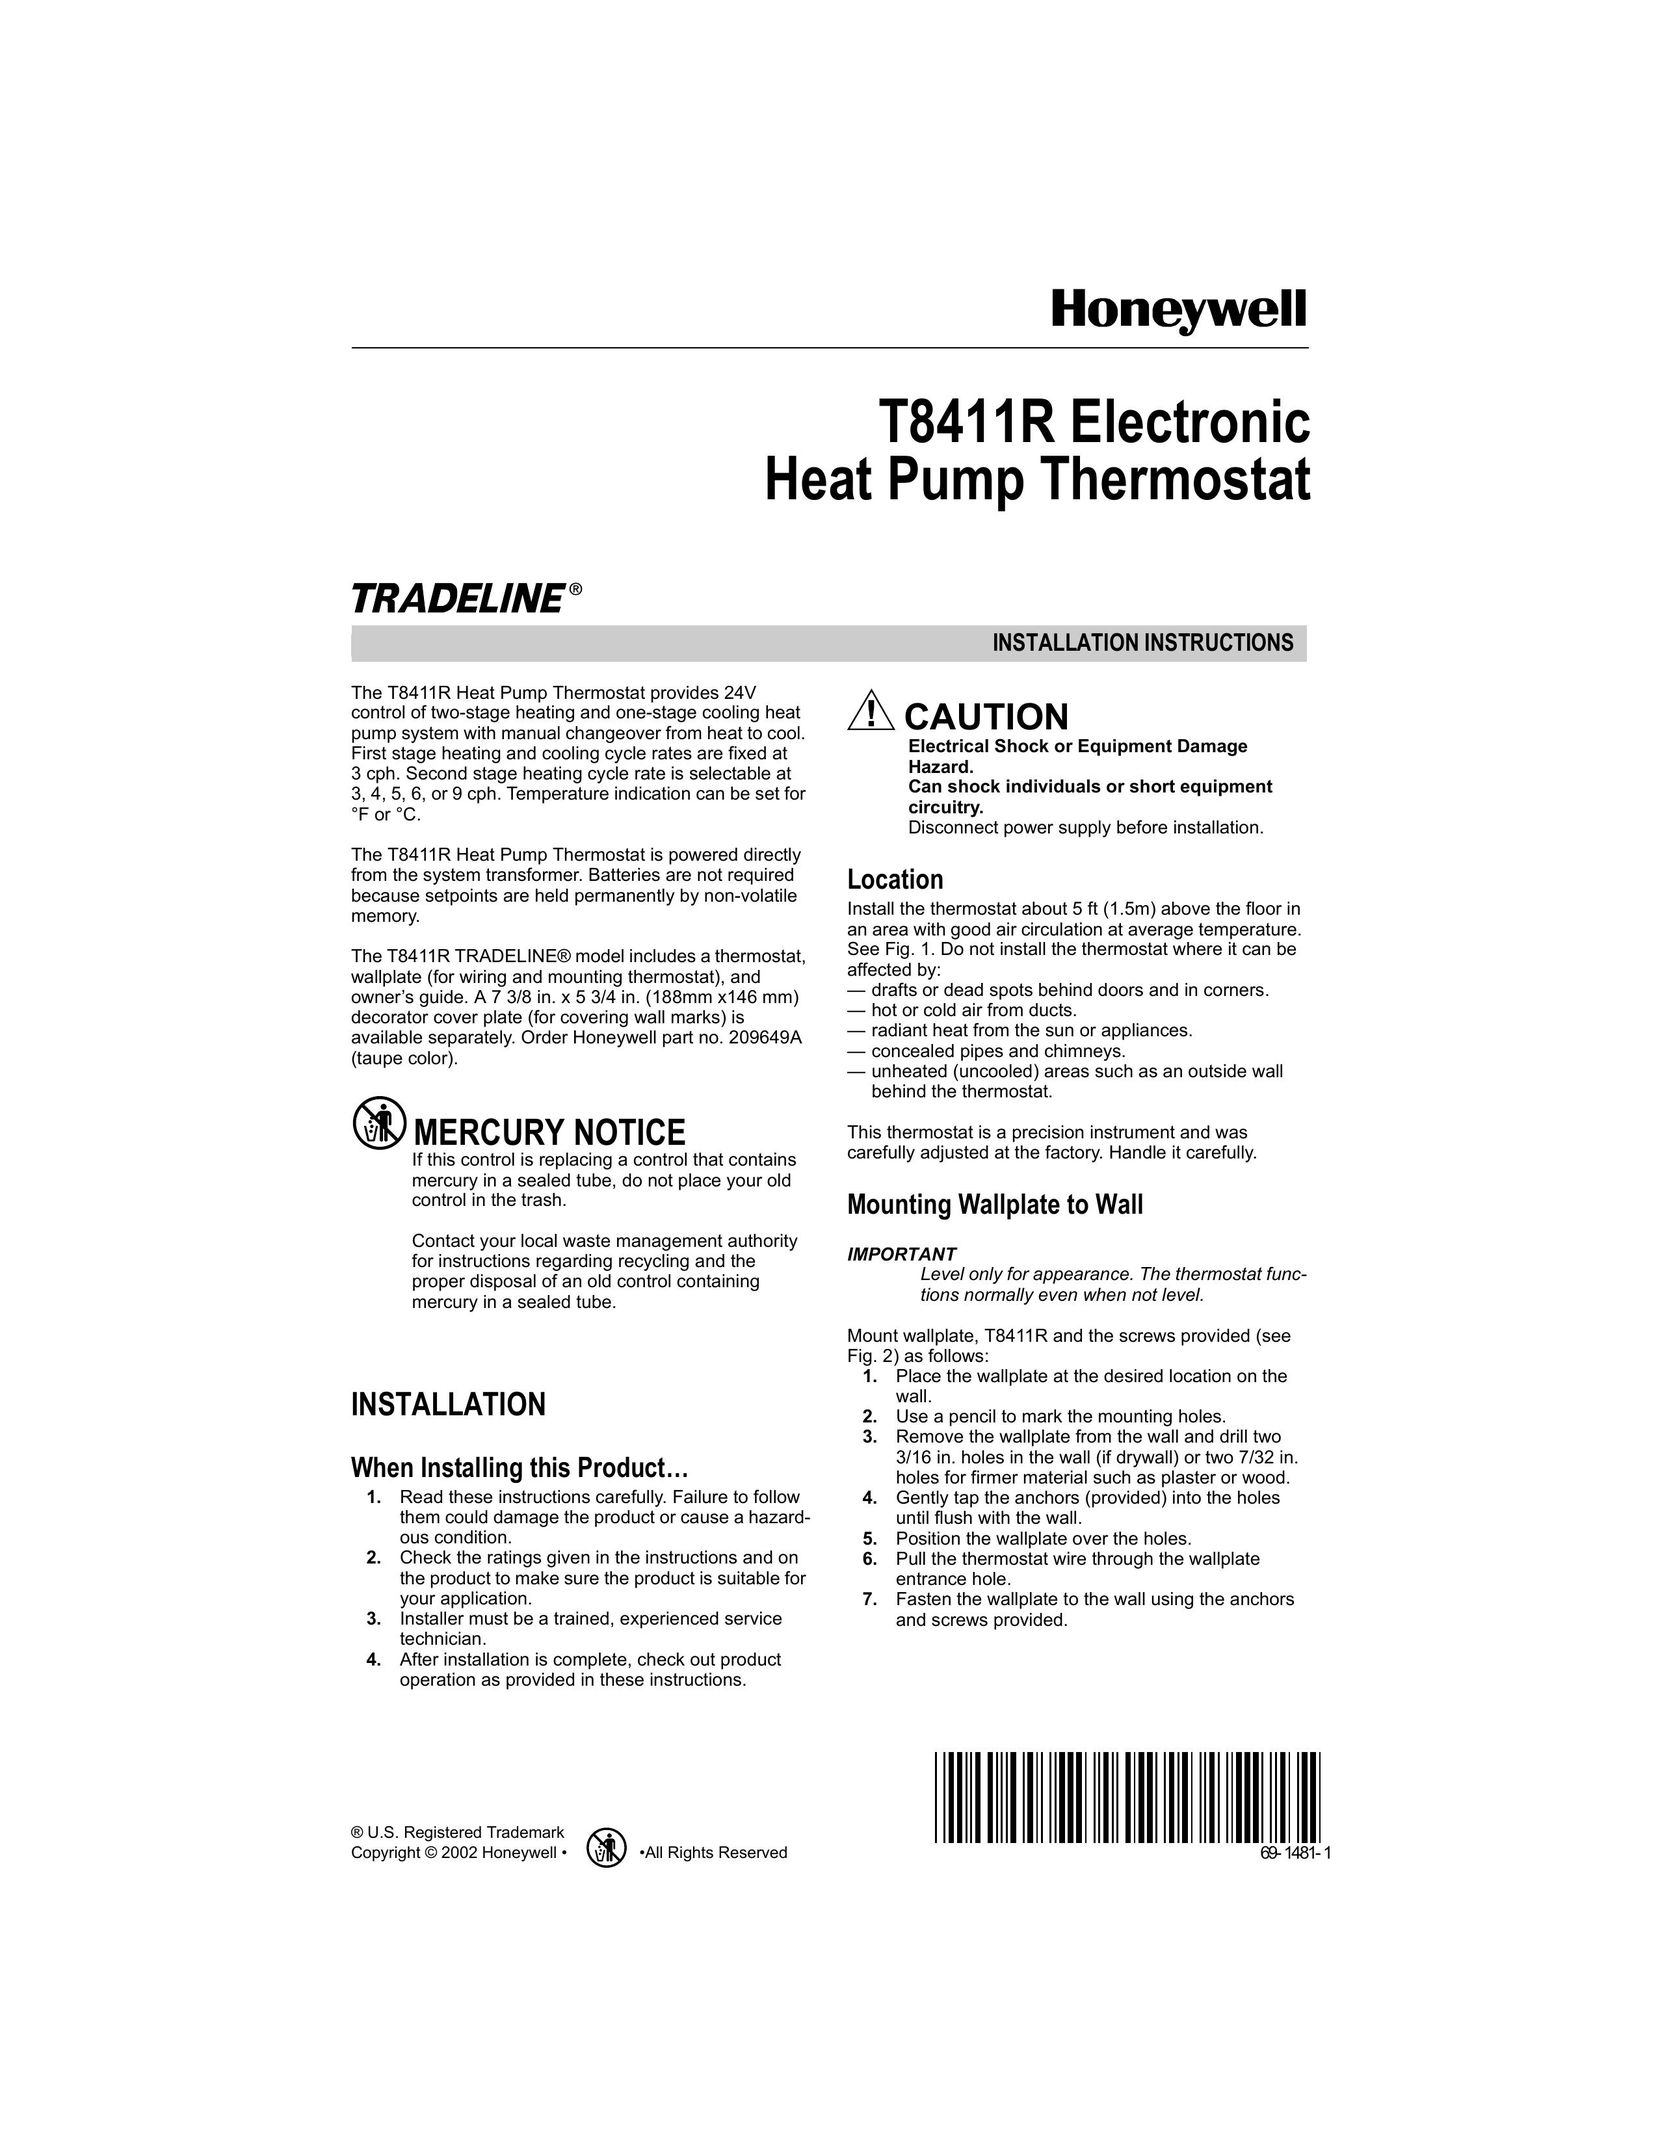 Honeywell T8411R Heat Pump User Manual